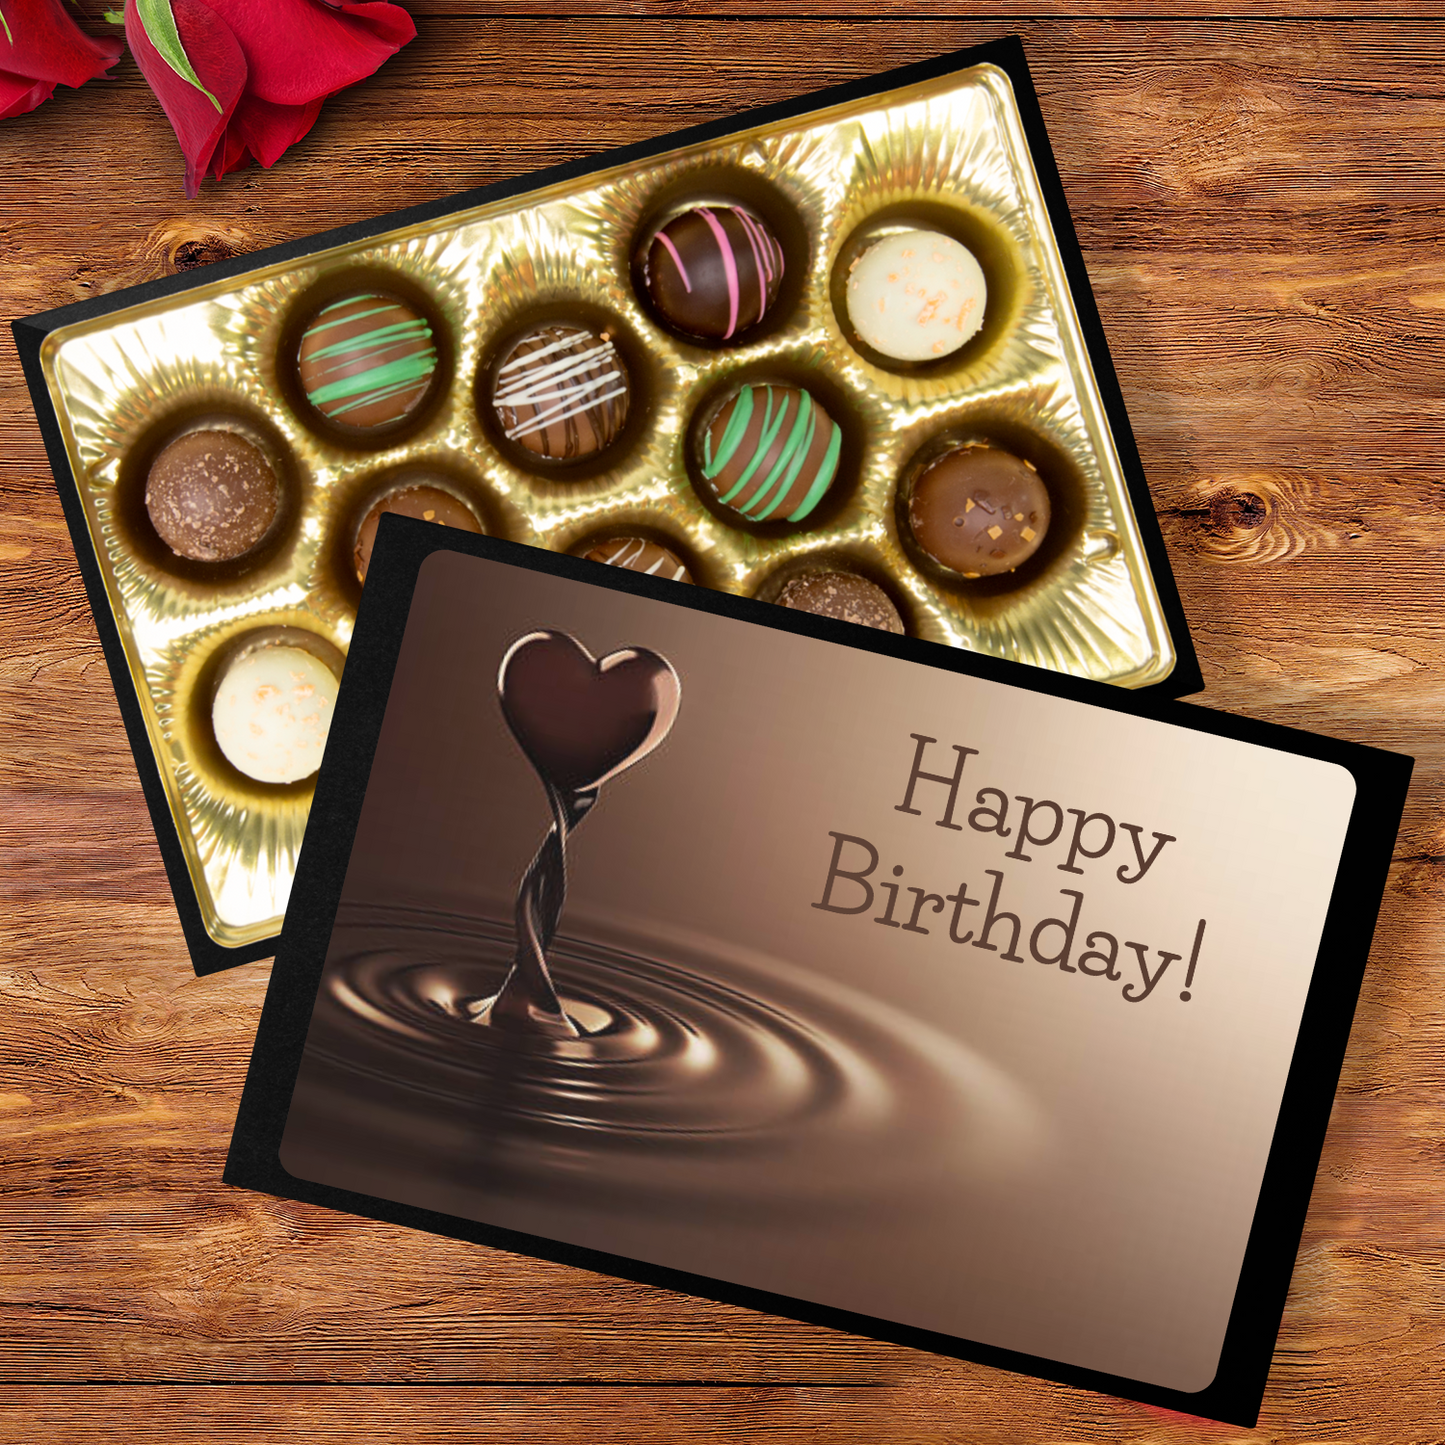 Chocolate Truffles, Hand Made Chocolate, Happy Birthday - Mug Project